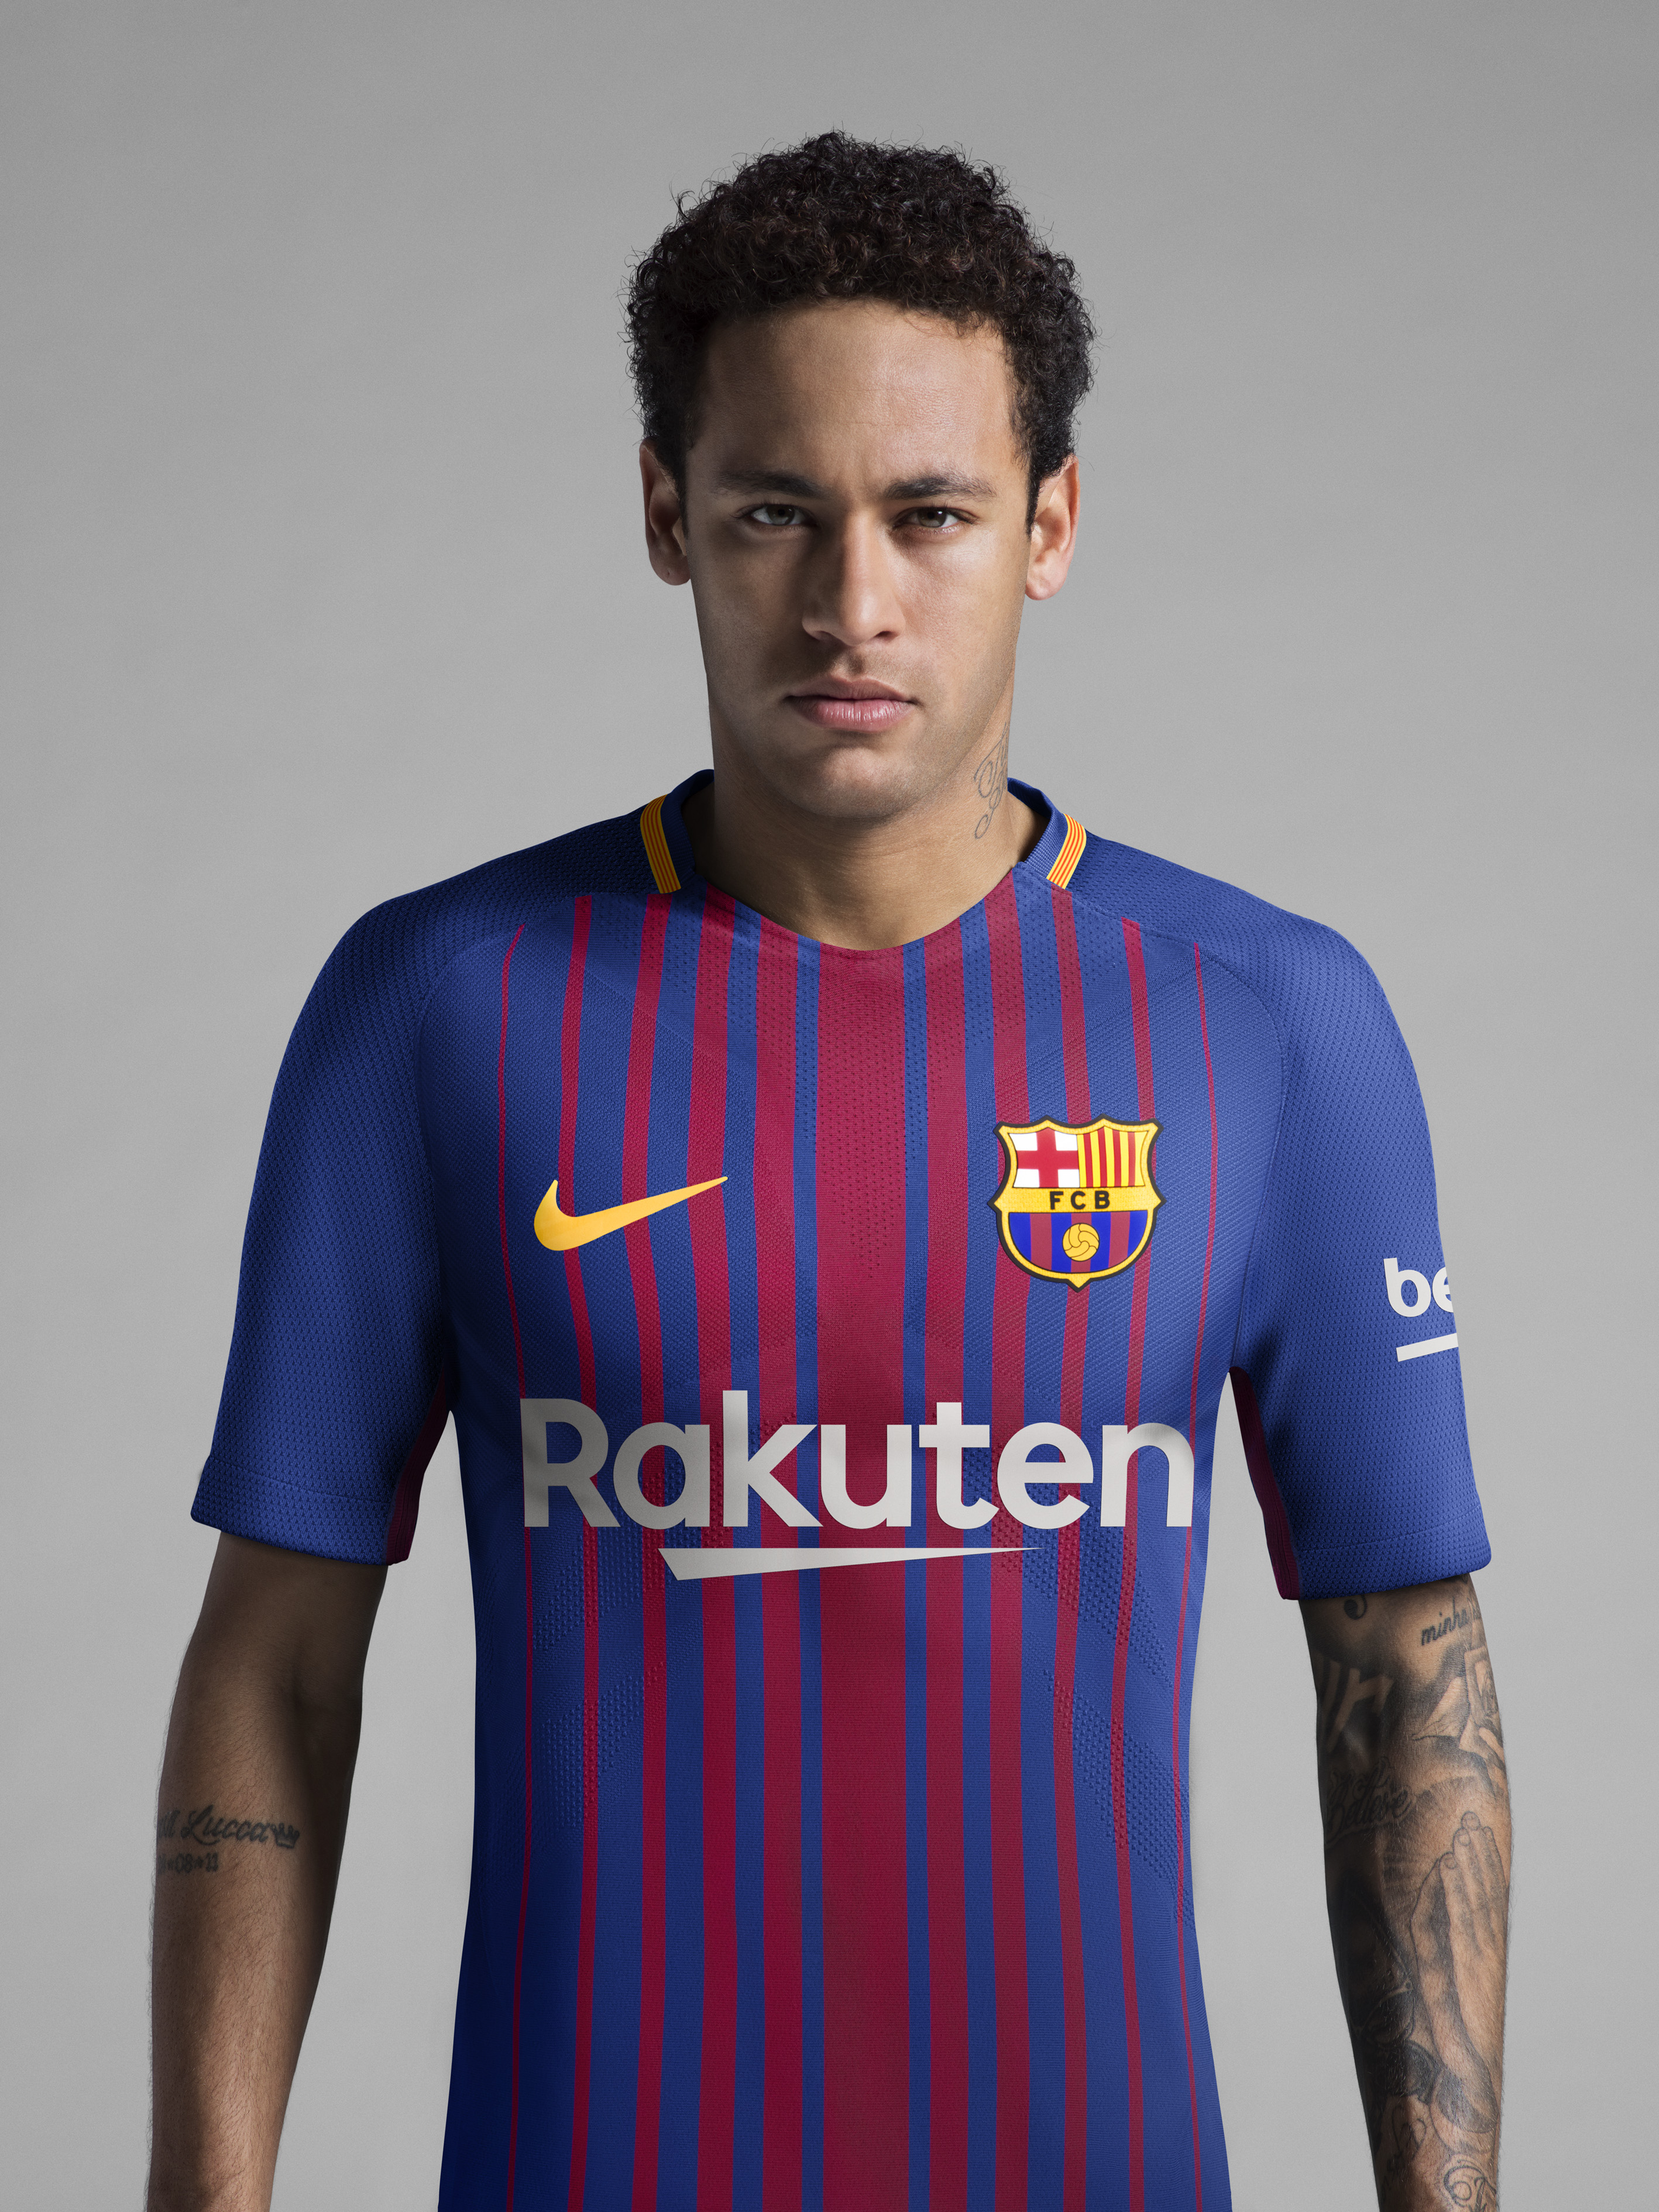 Maillot Nike Football FC Barcelona Neymar 2017-2018